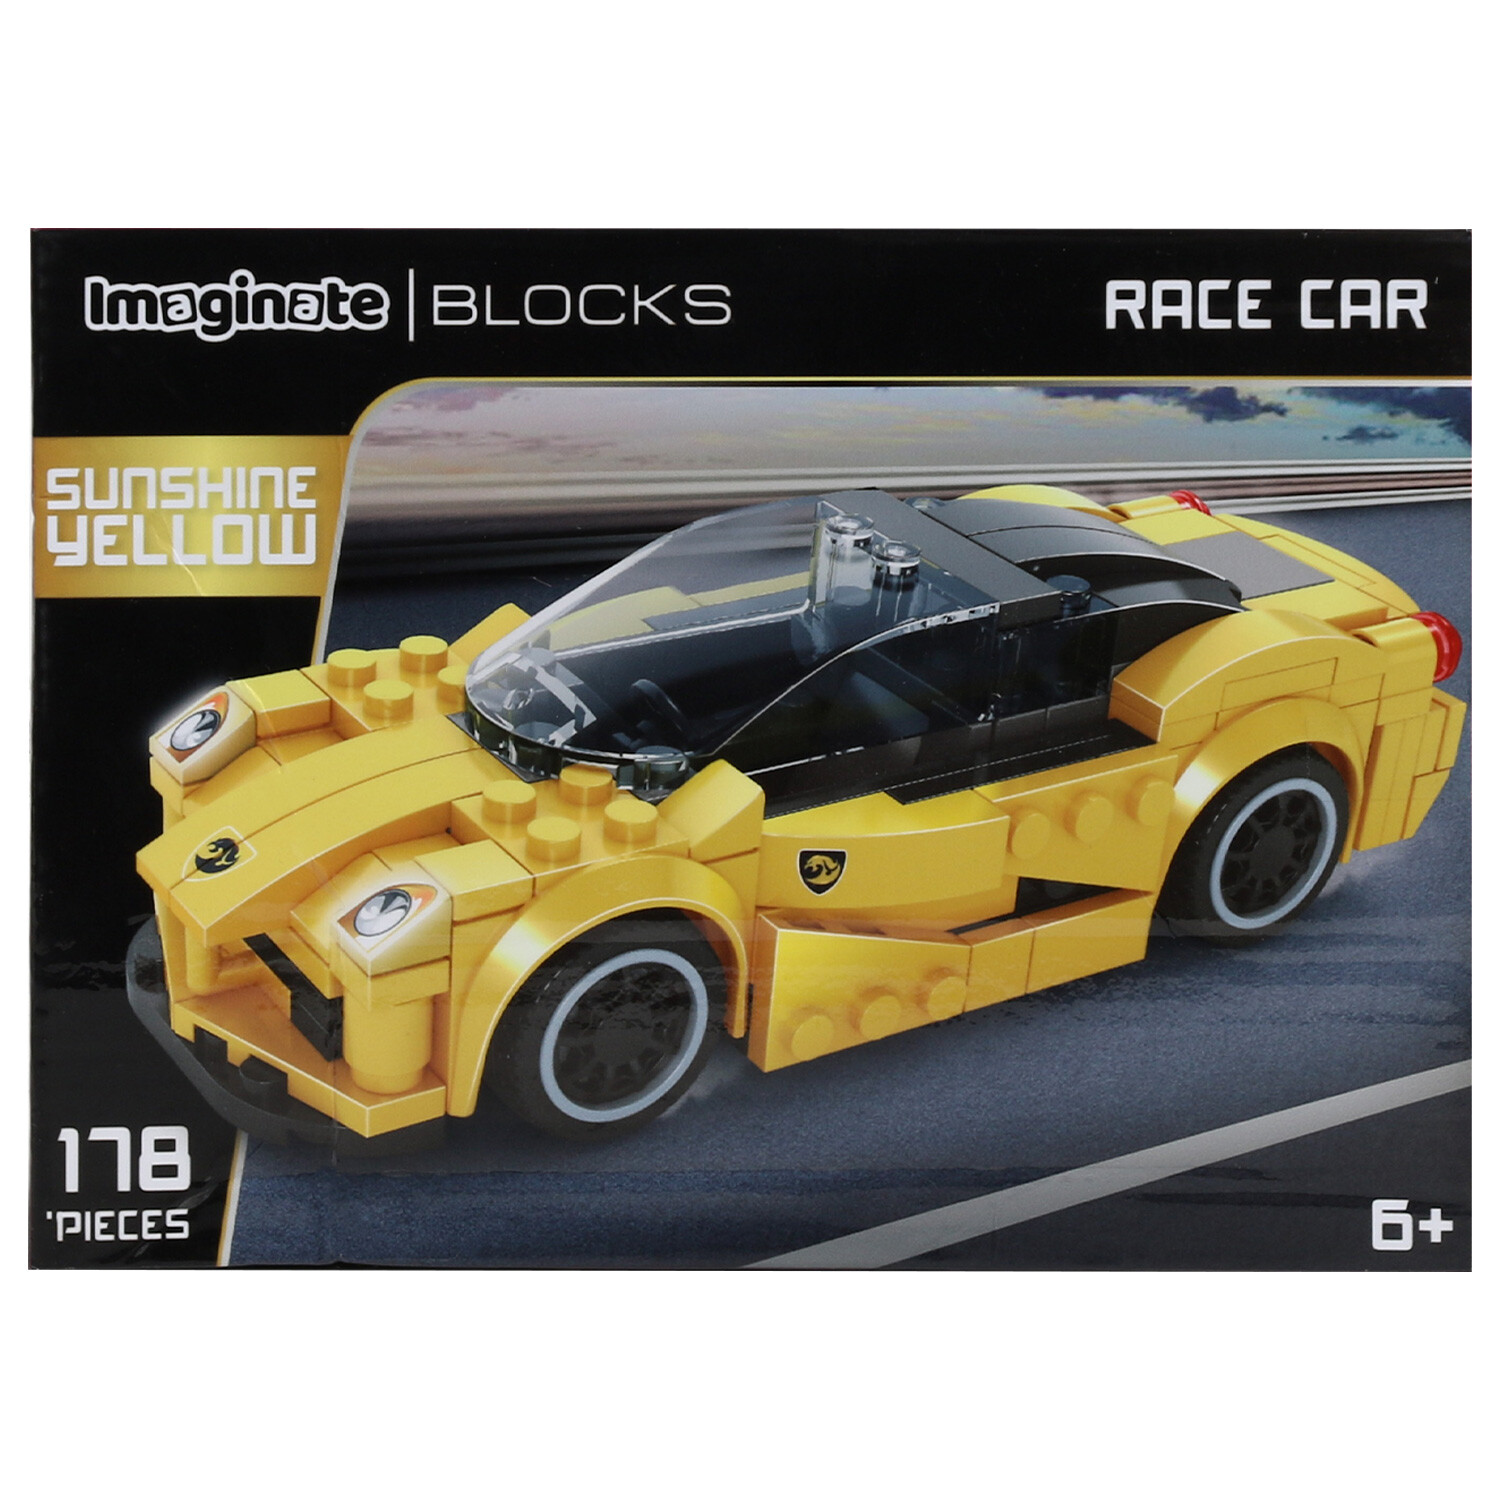 Imaginate Blocks Race Car Image 1